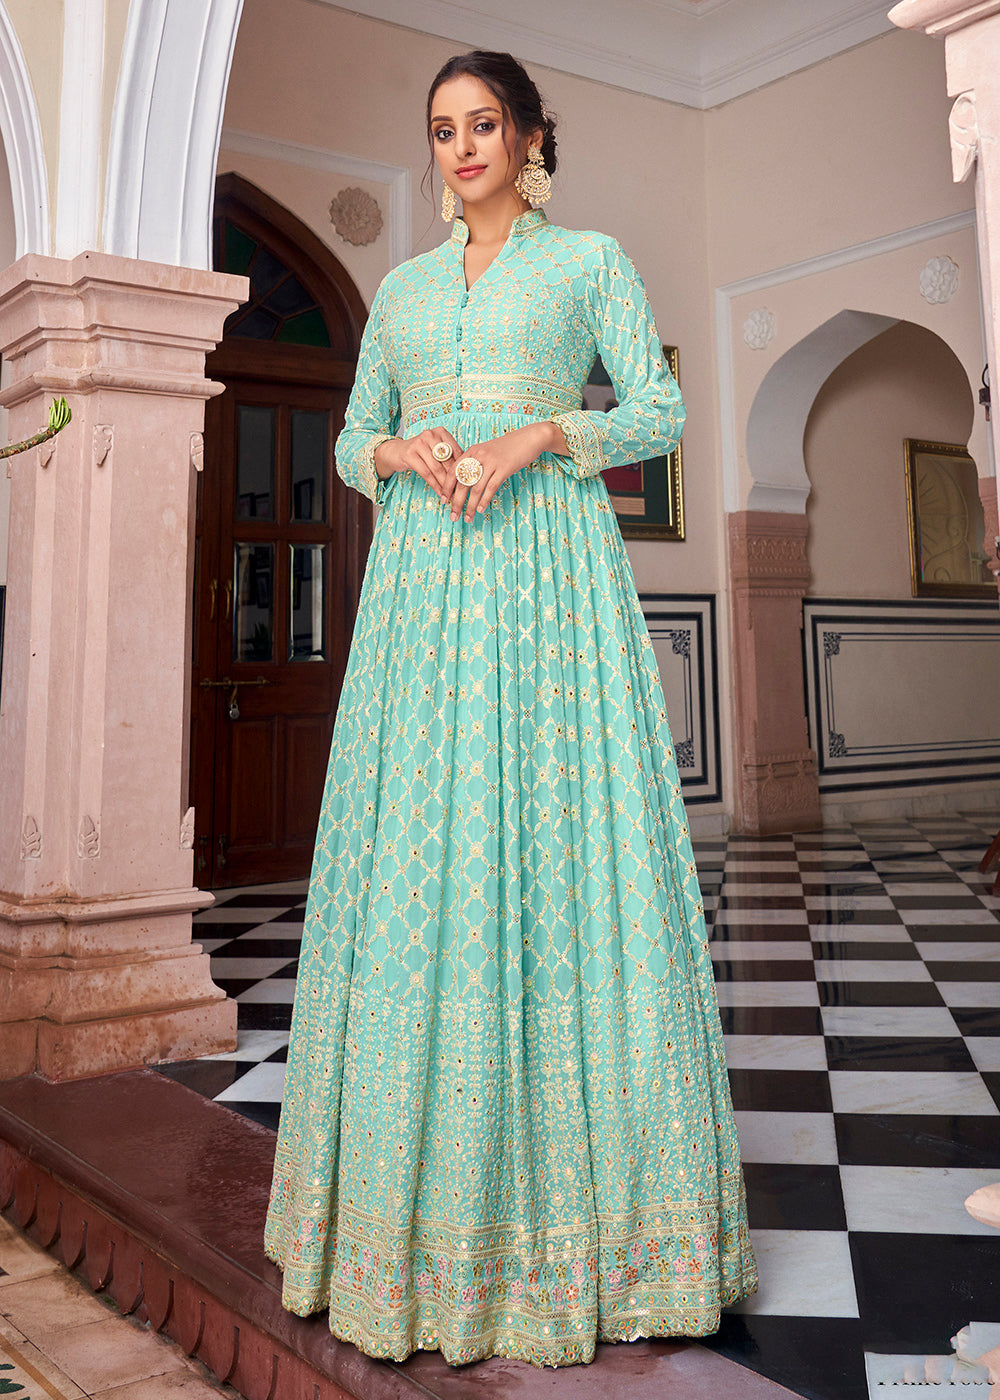 Buy Now Aqua Green Pretty Embellished Work Anarkali Dress Online in USA, UK, Australia, New Zealand, Canada & Worldwide at Empress Clothing.